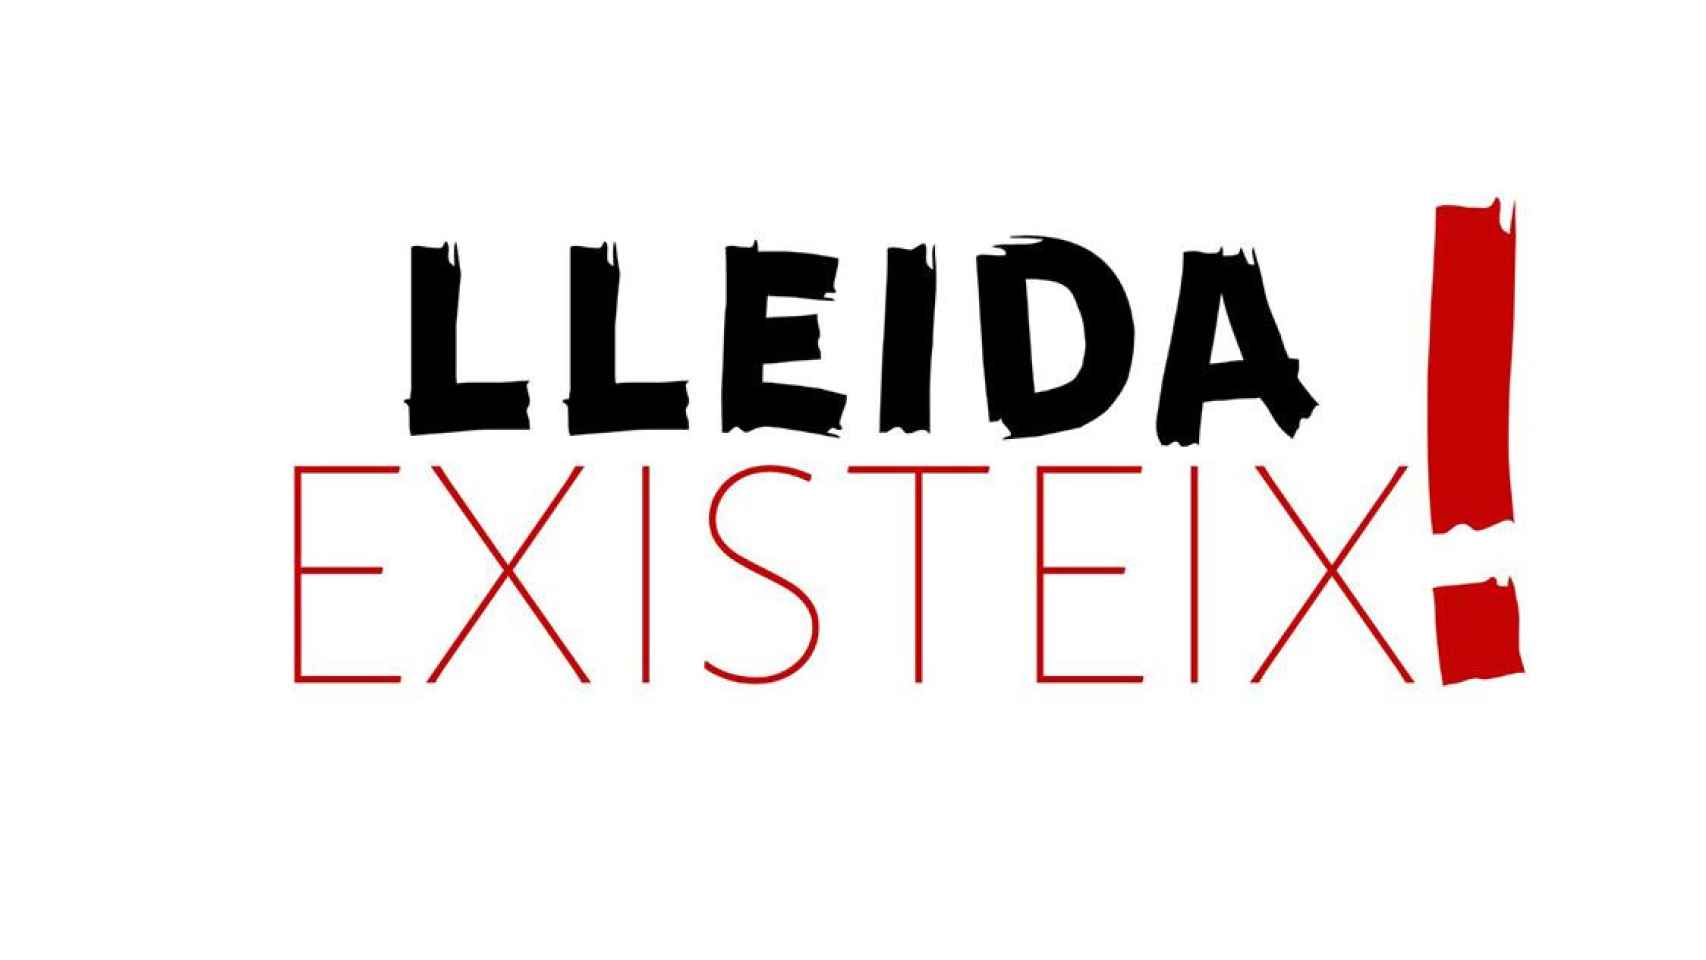 Logotipo de la campaña 'Lleida existeix' que nace como lobby territorial / CG